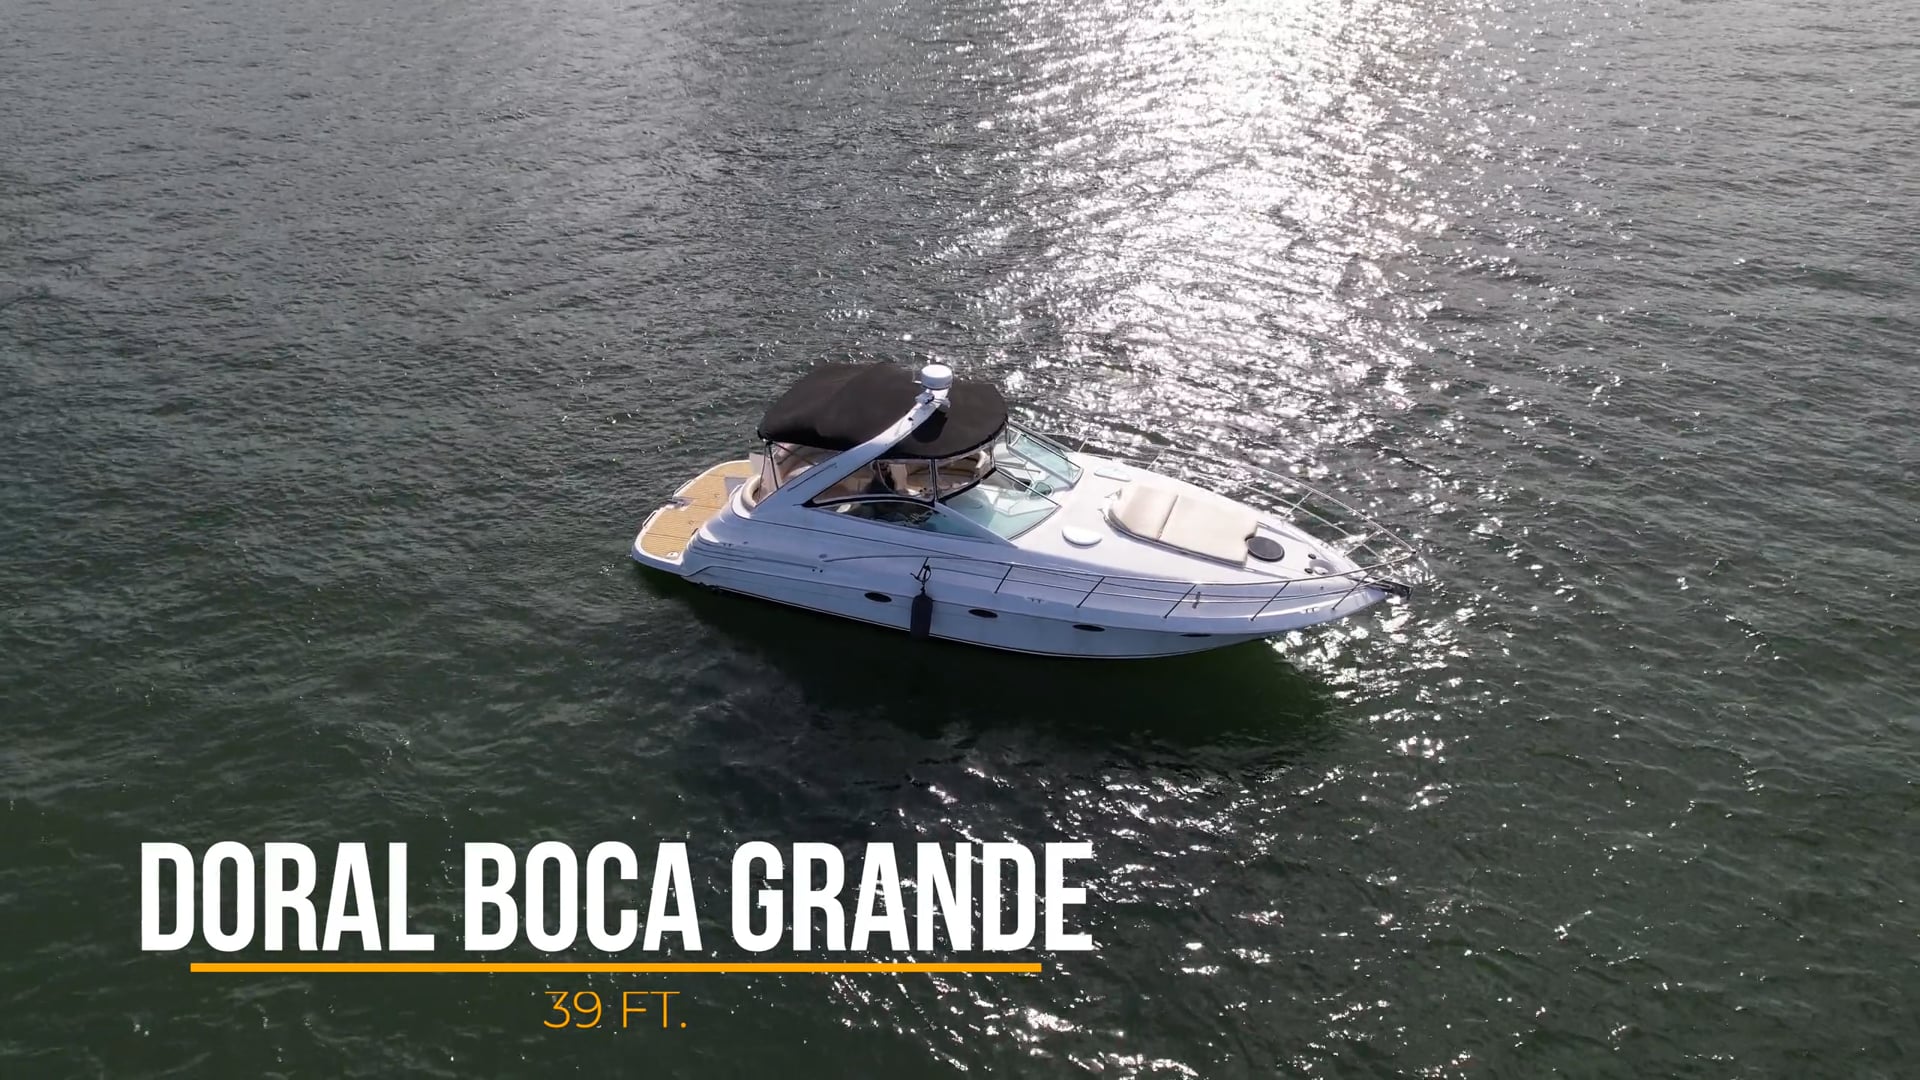 Doral Boca Grande by Miami Dream Yachts